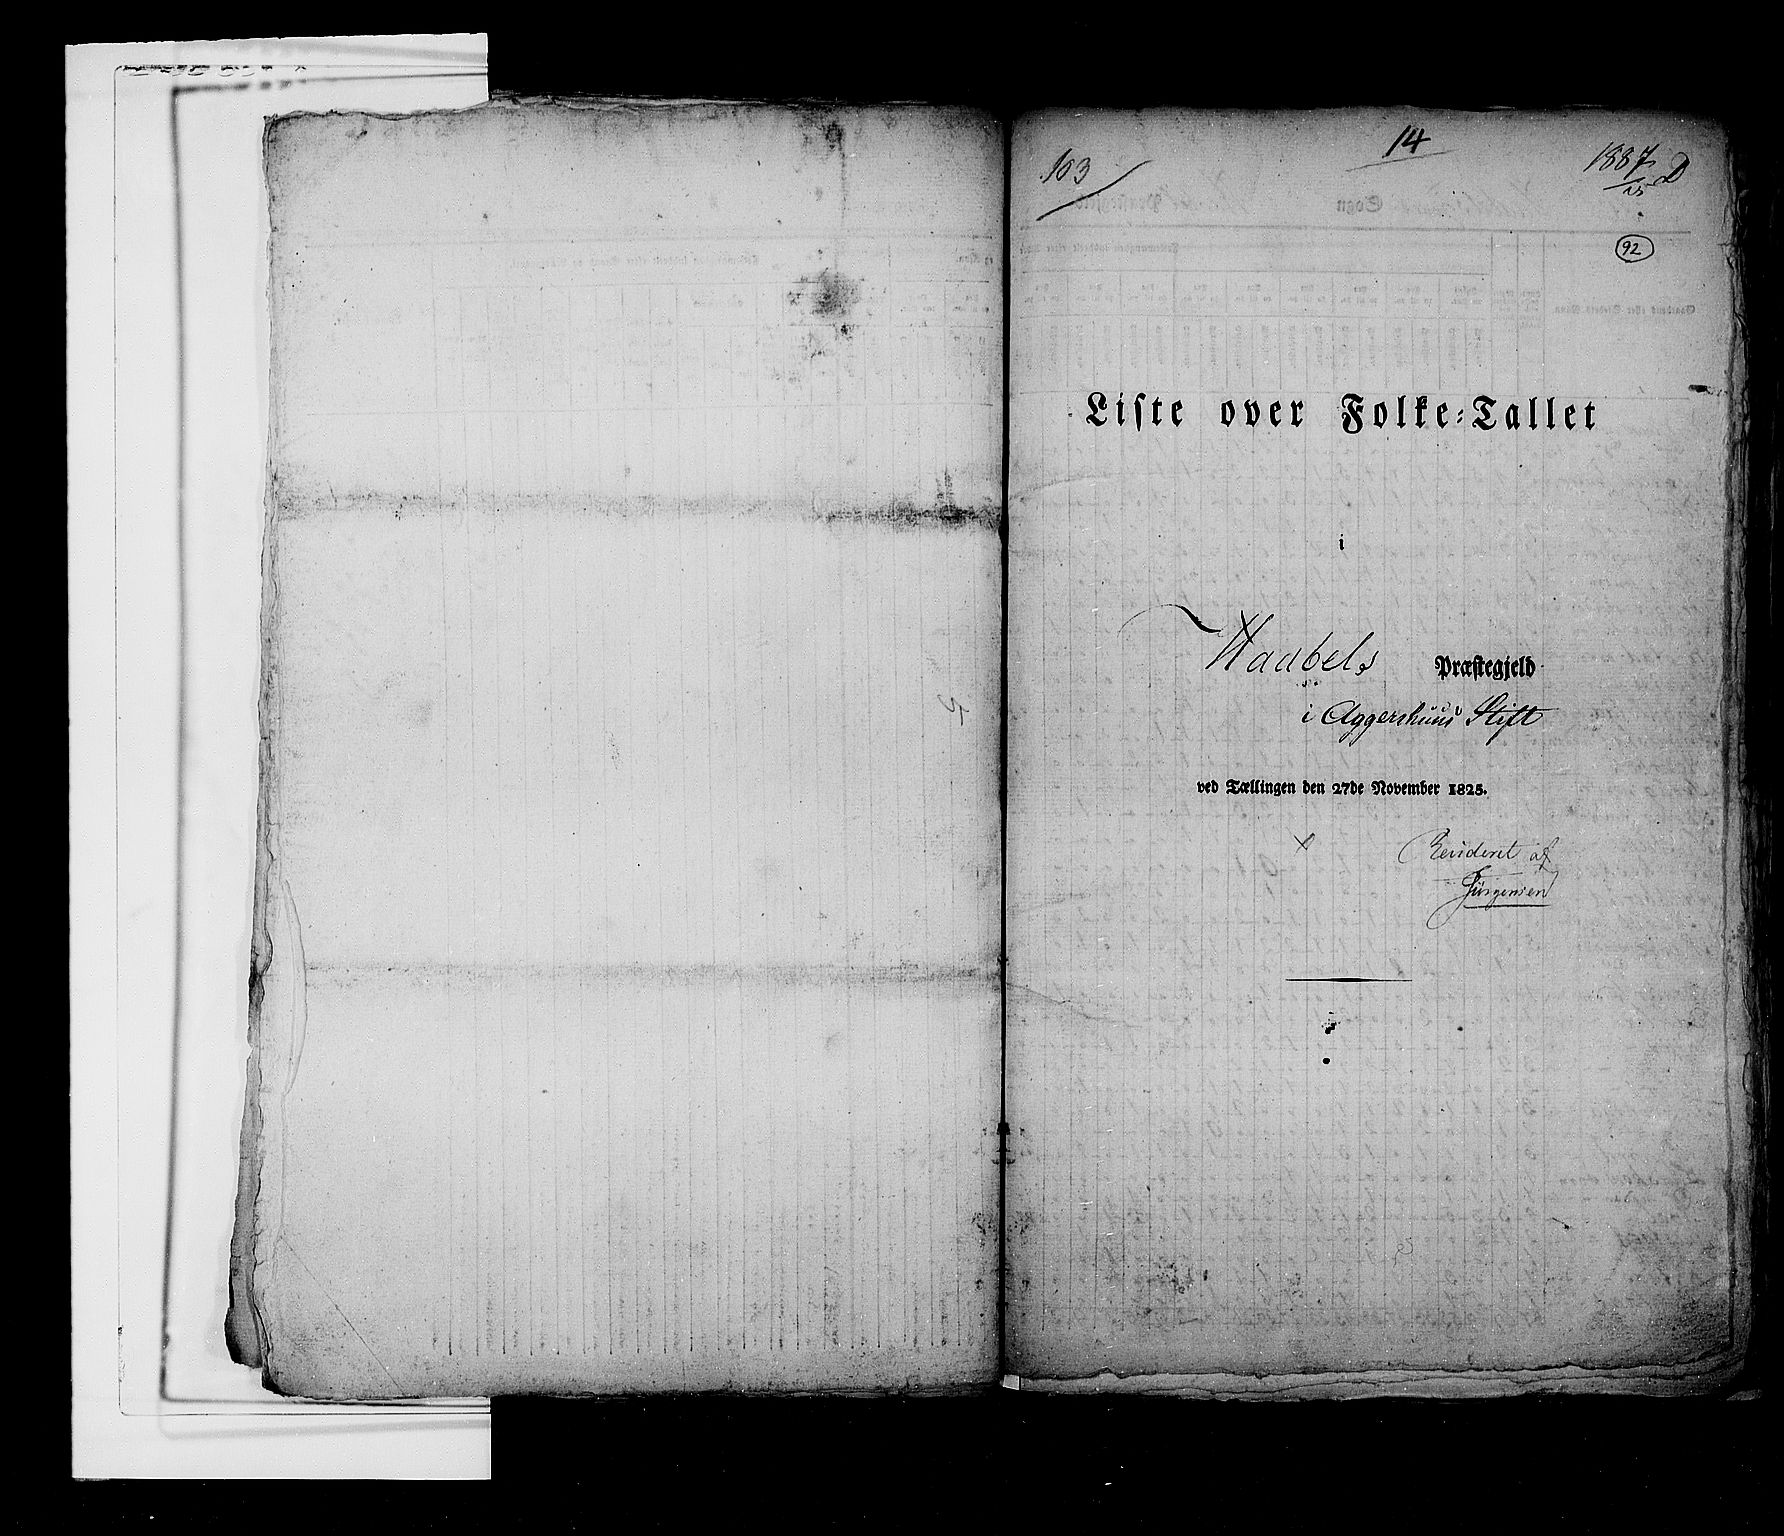 RA, Folketellingen 1825, bind 3: Smålenenes amt, 1825, s. 92